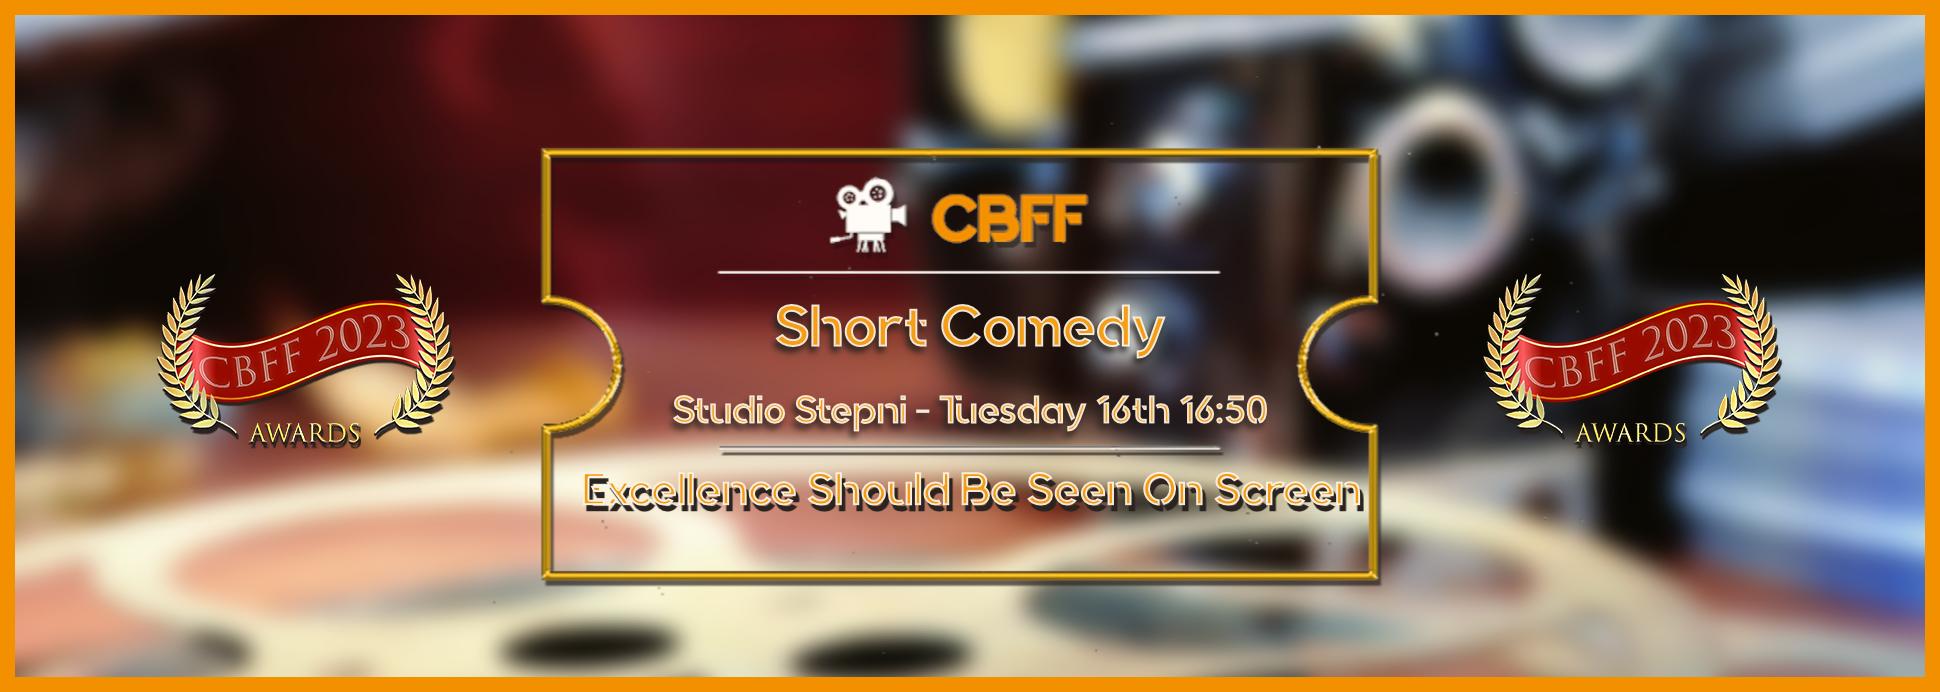 Studio Stepni Short Comedy 16th 16:50